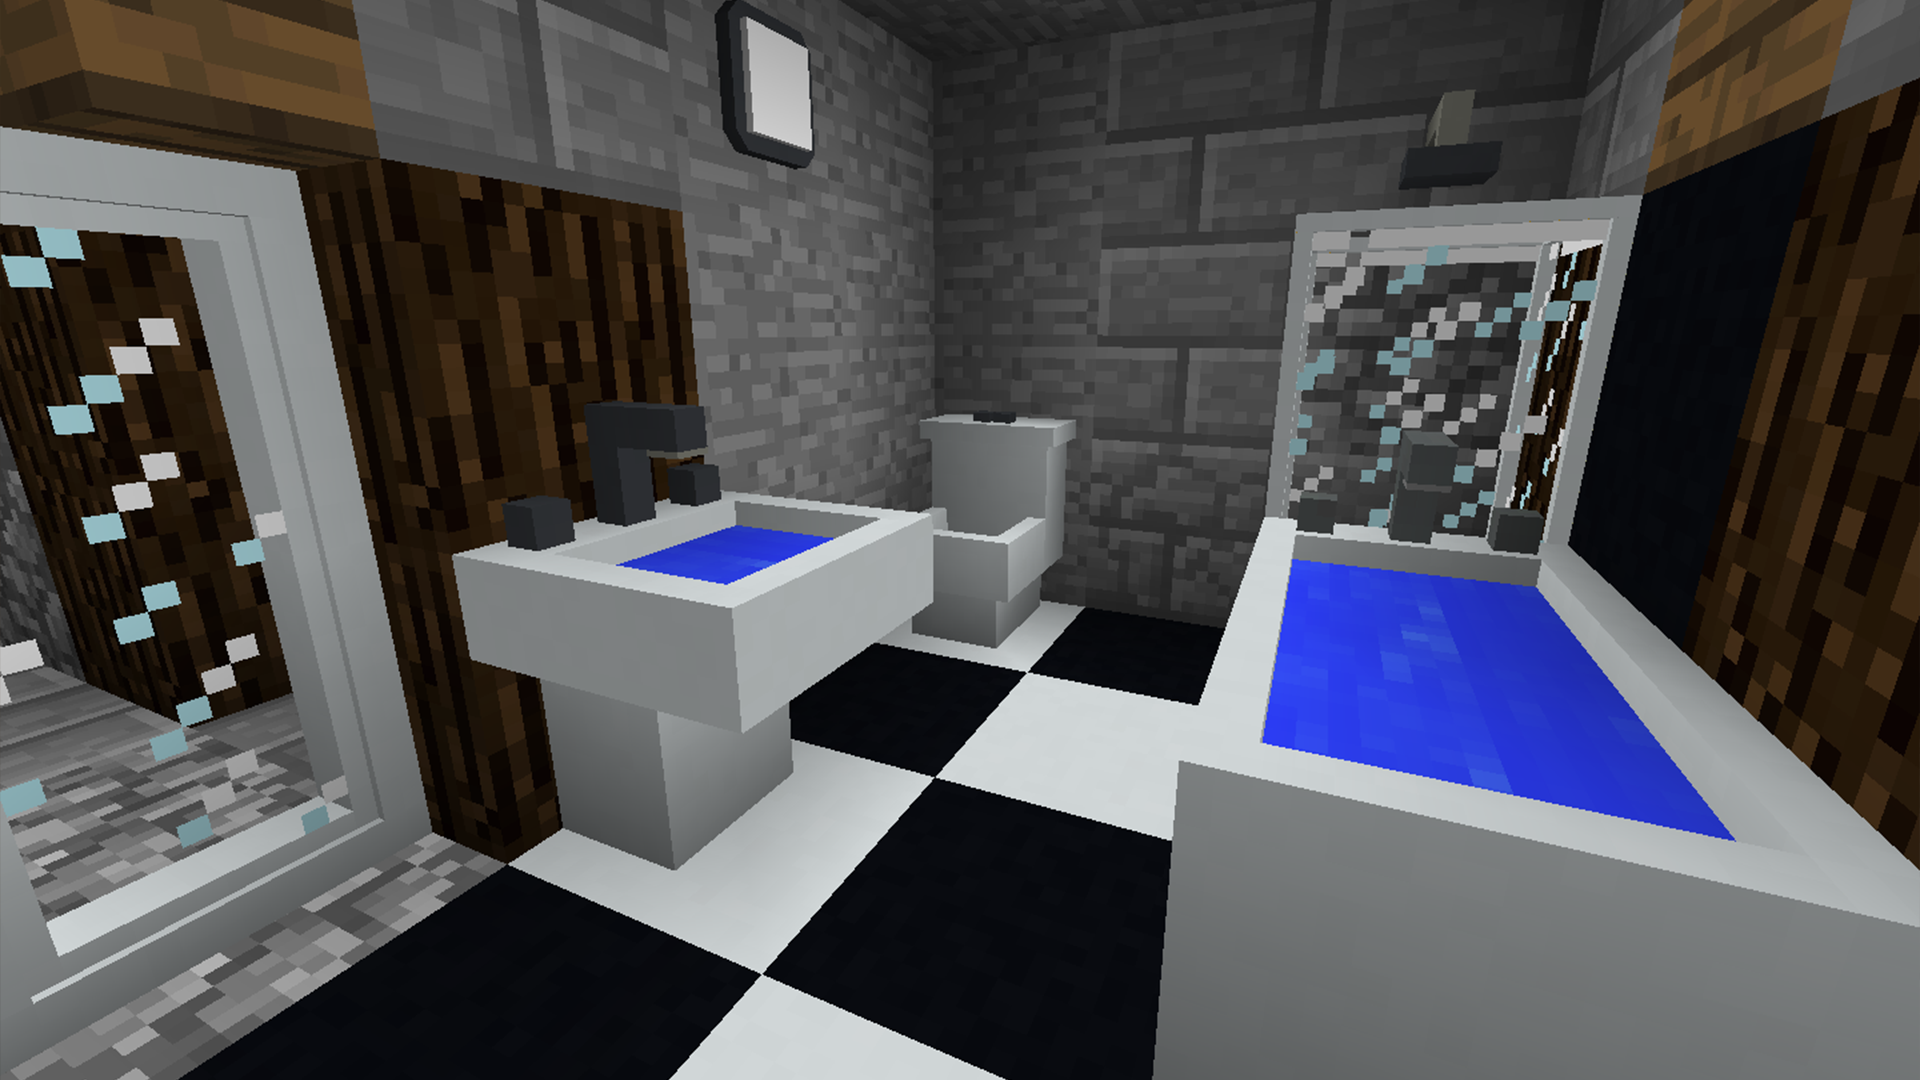 Minecraft 1.12.2 Mod мебель. Мод на мебель в майнкрафт 1.12.2. Мебель для МАЙНКРАФТА 1.16.5. Mr Crayfish Furniture Mod 1.12.2 кран. Мод на майнкрафт скибиди туалеты v 19.1